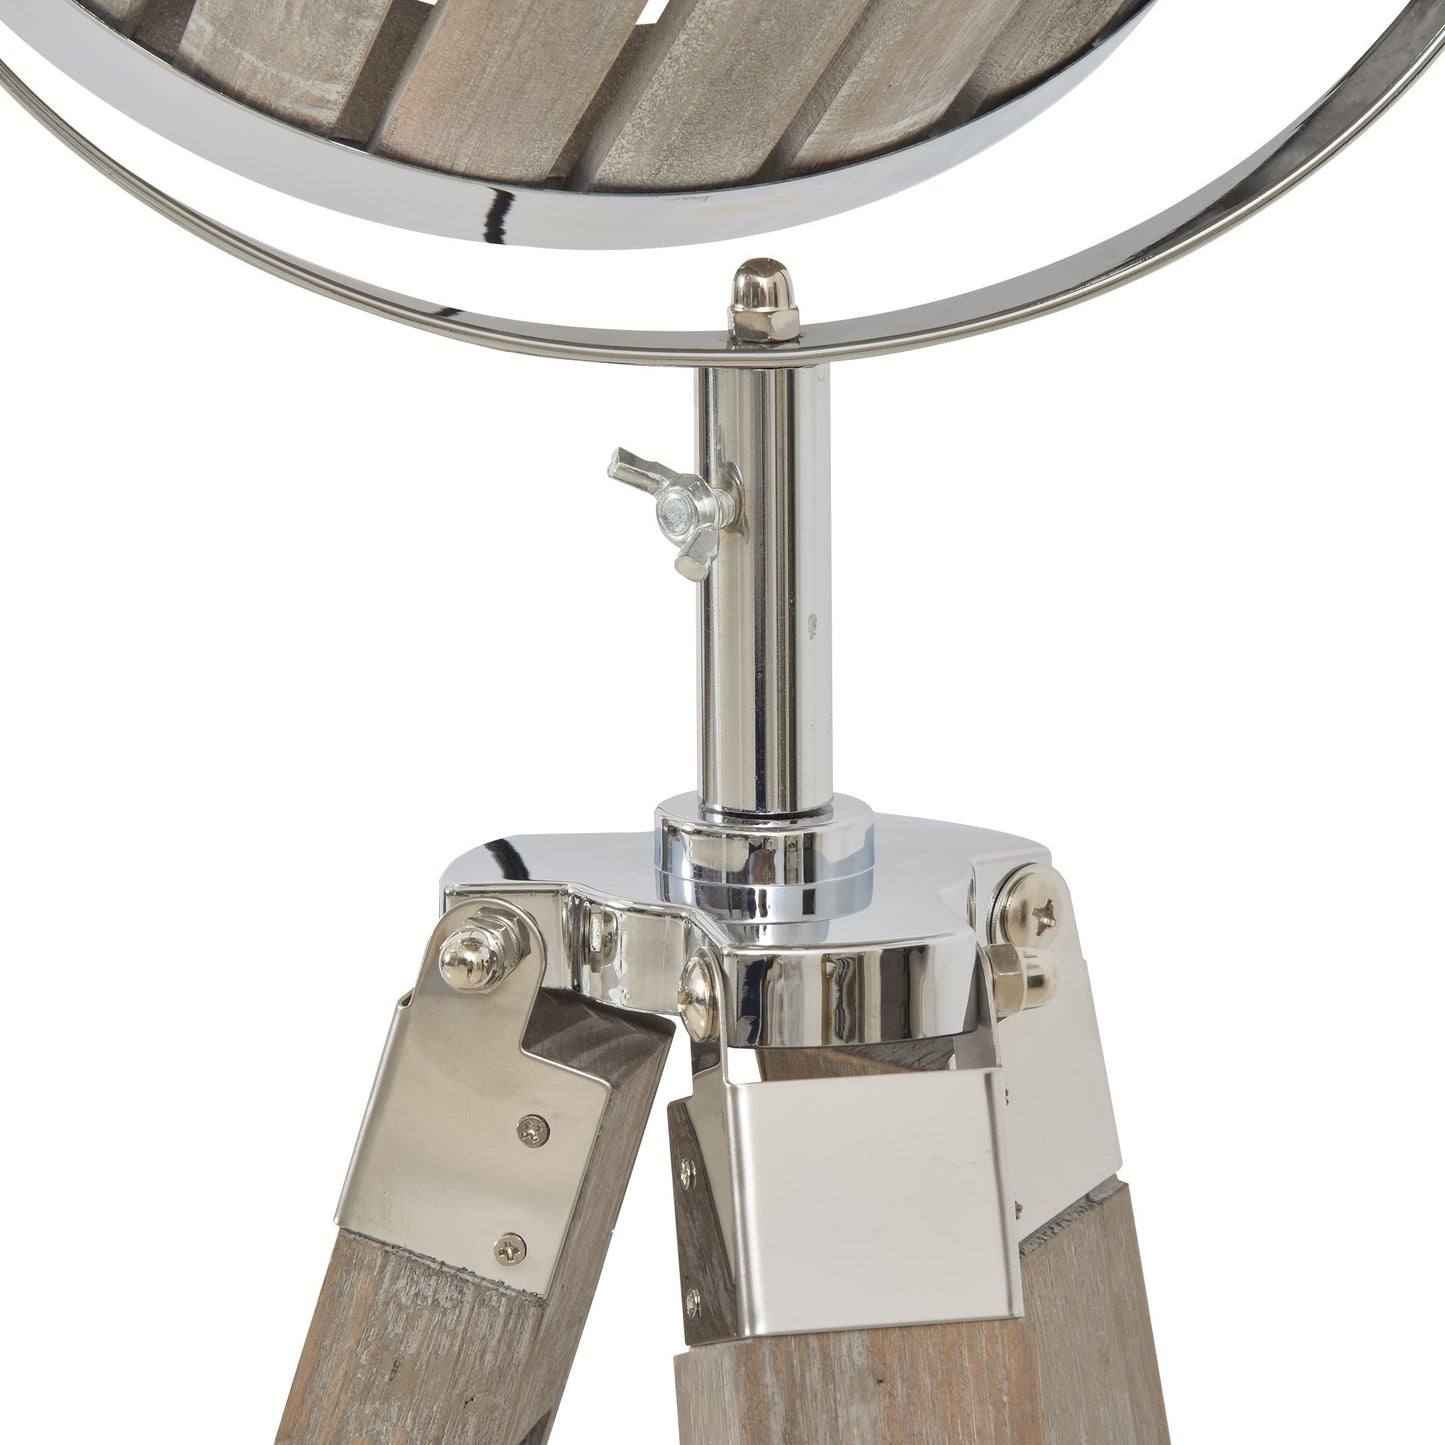 HOMCOM Pine Wood Tripod Floor Lamp Standing Lamp 110-150H x 63W x 63Dcm Brown and Silver